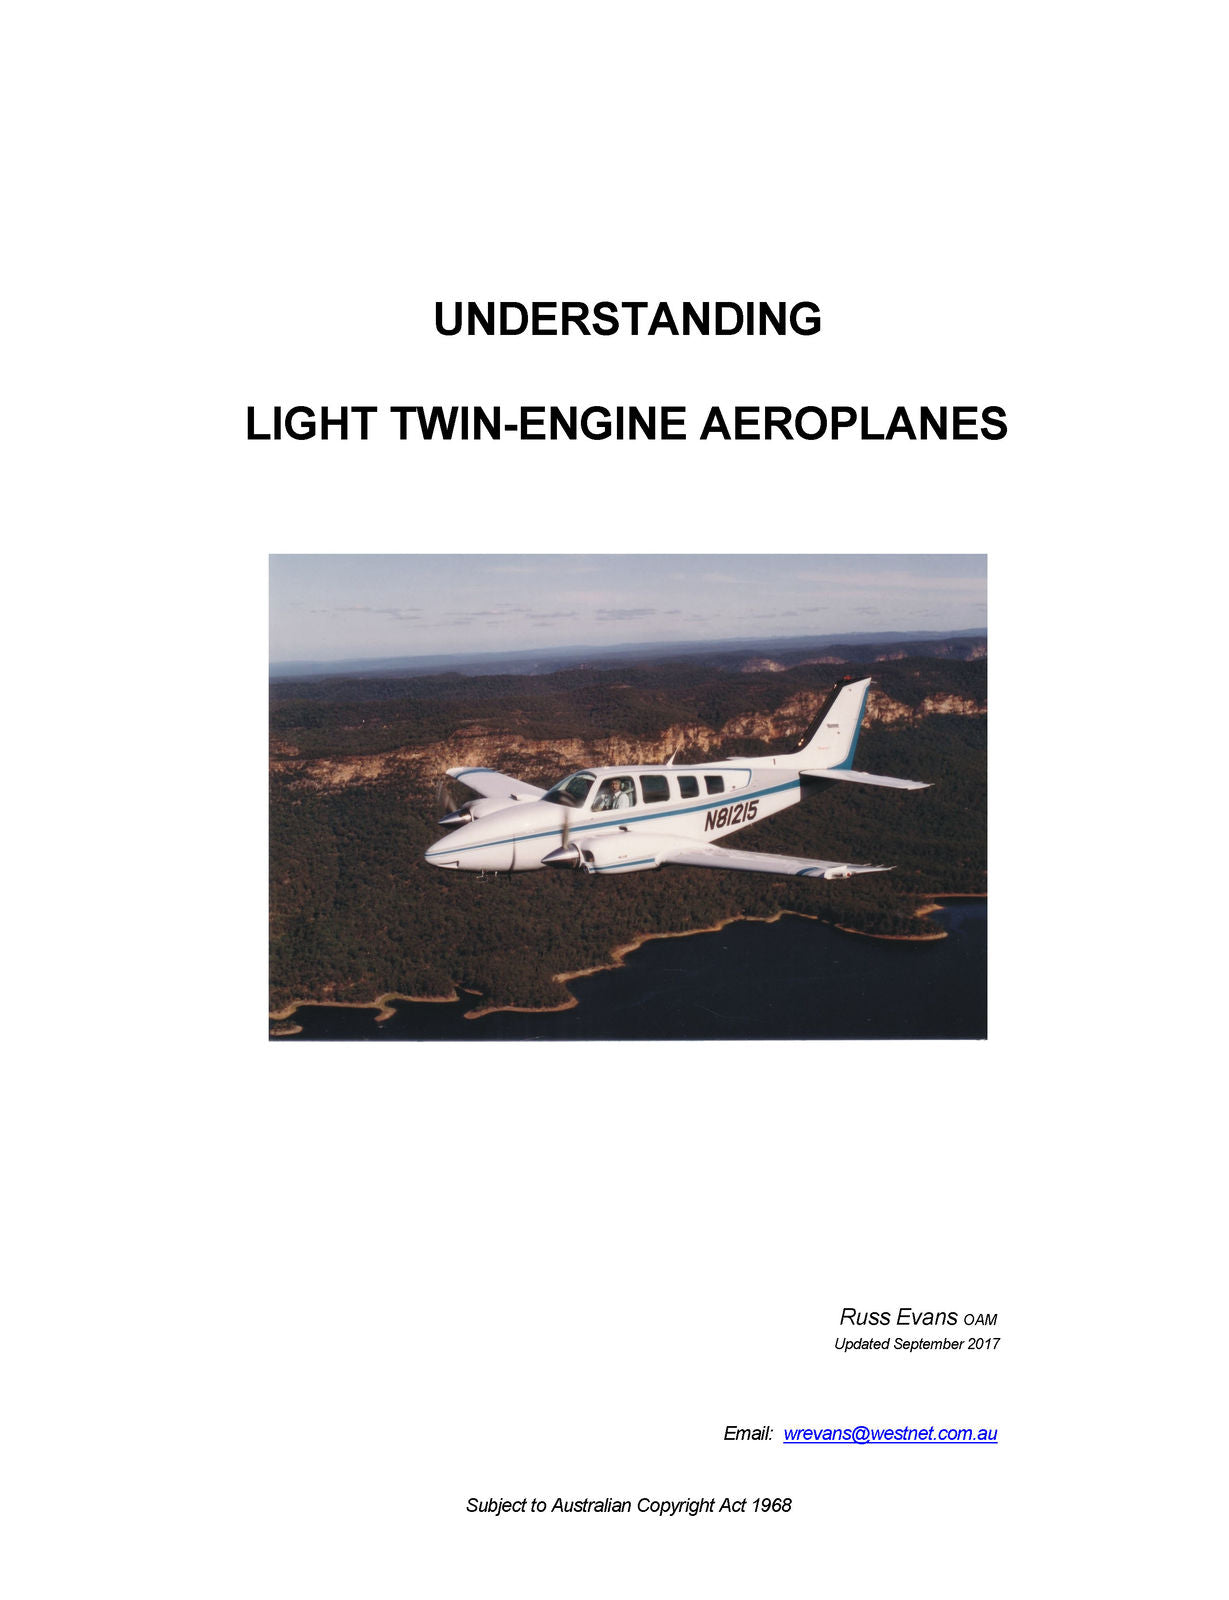 Understanding Light Twin-Engine Aeroplanes